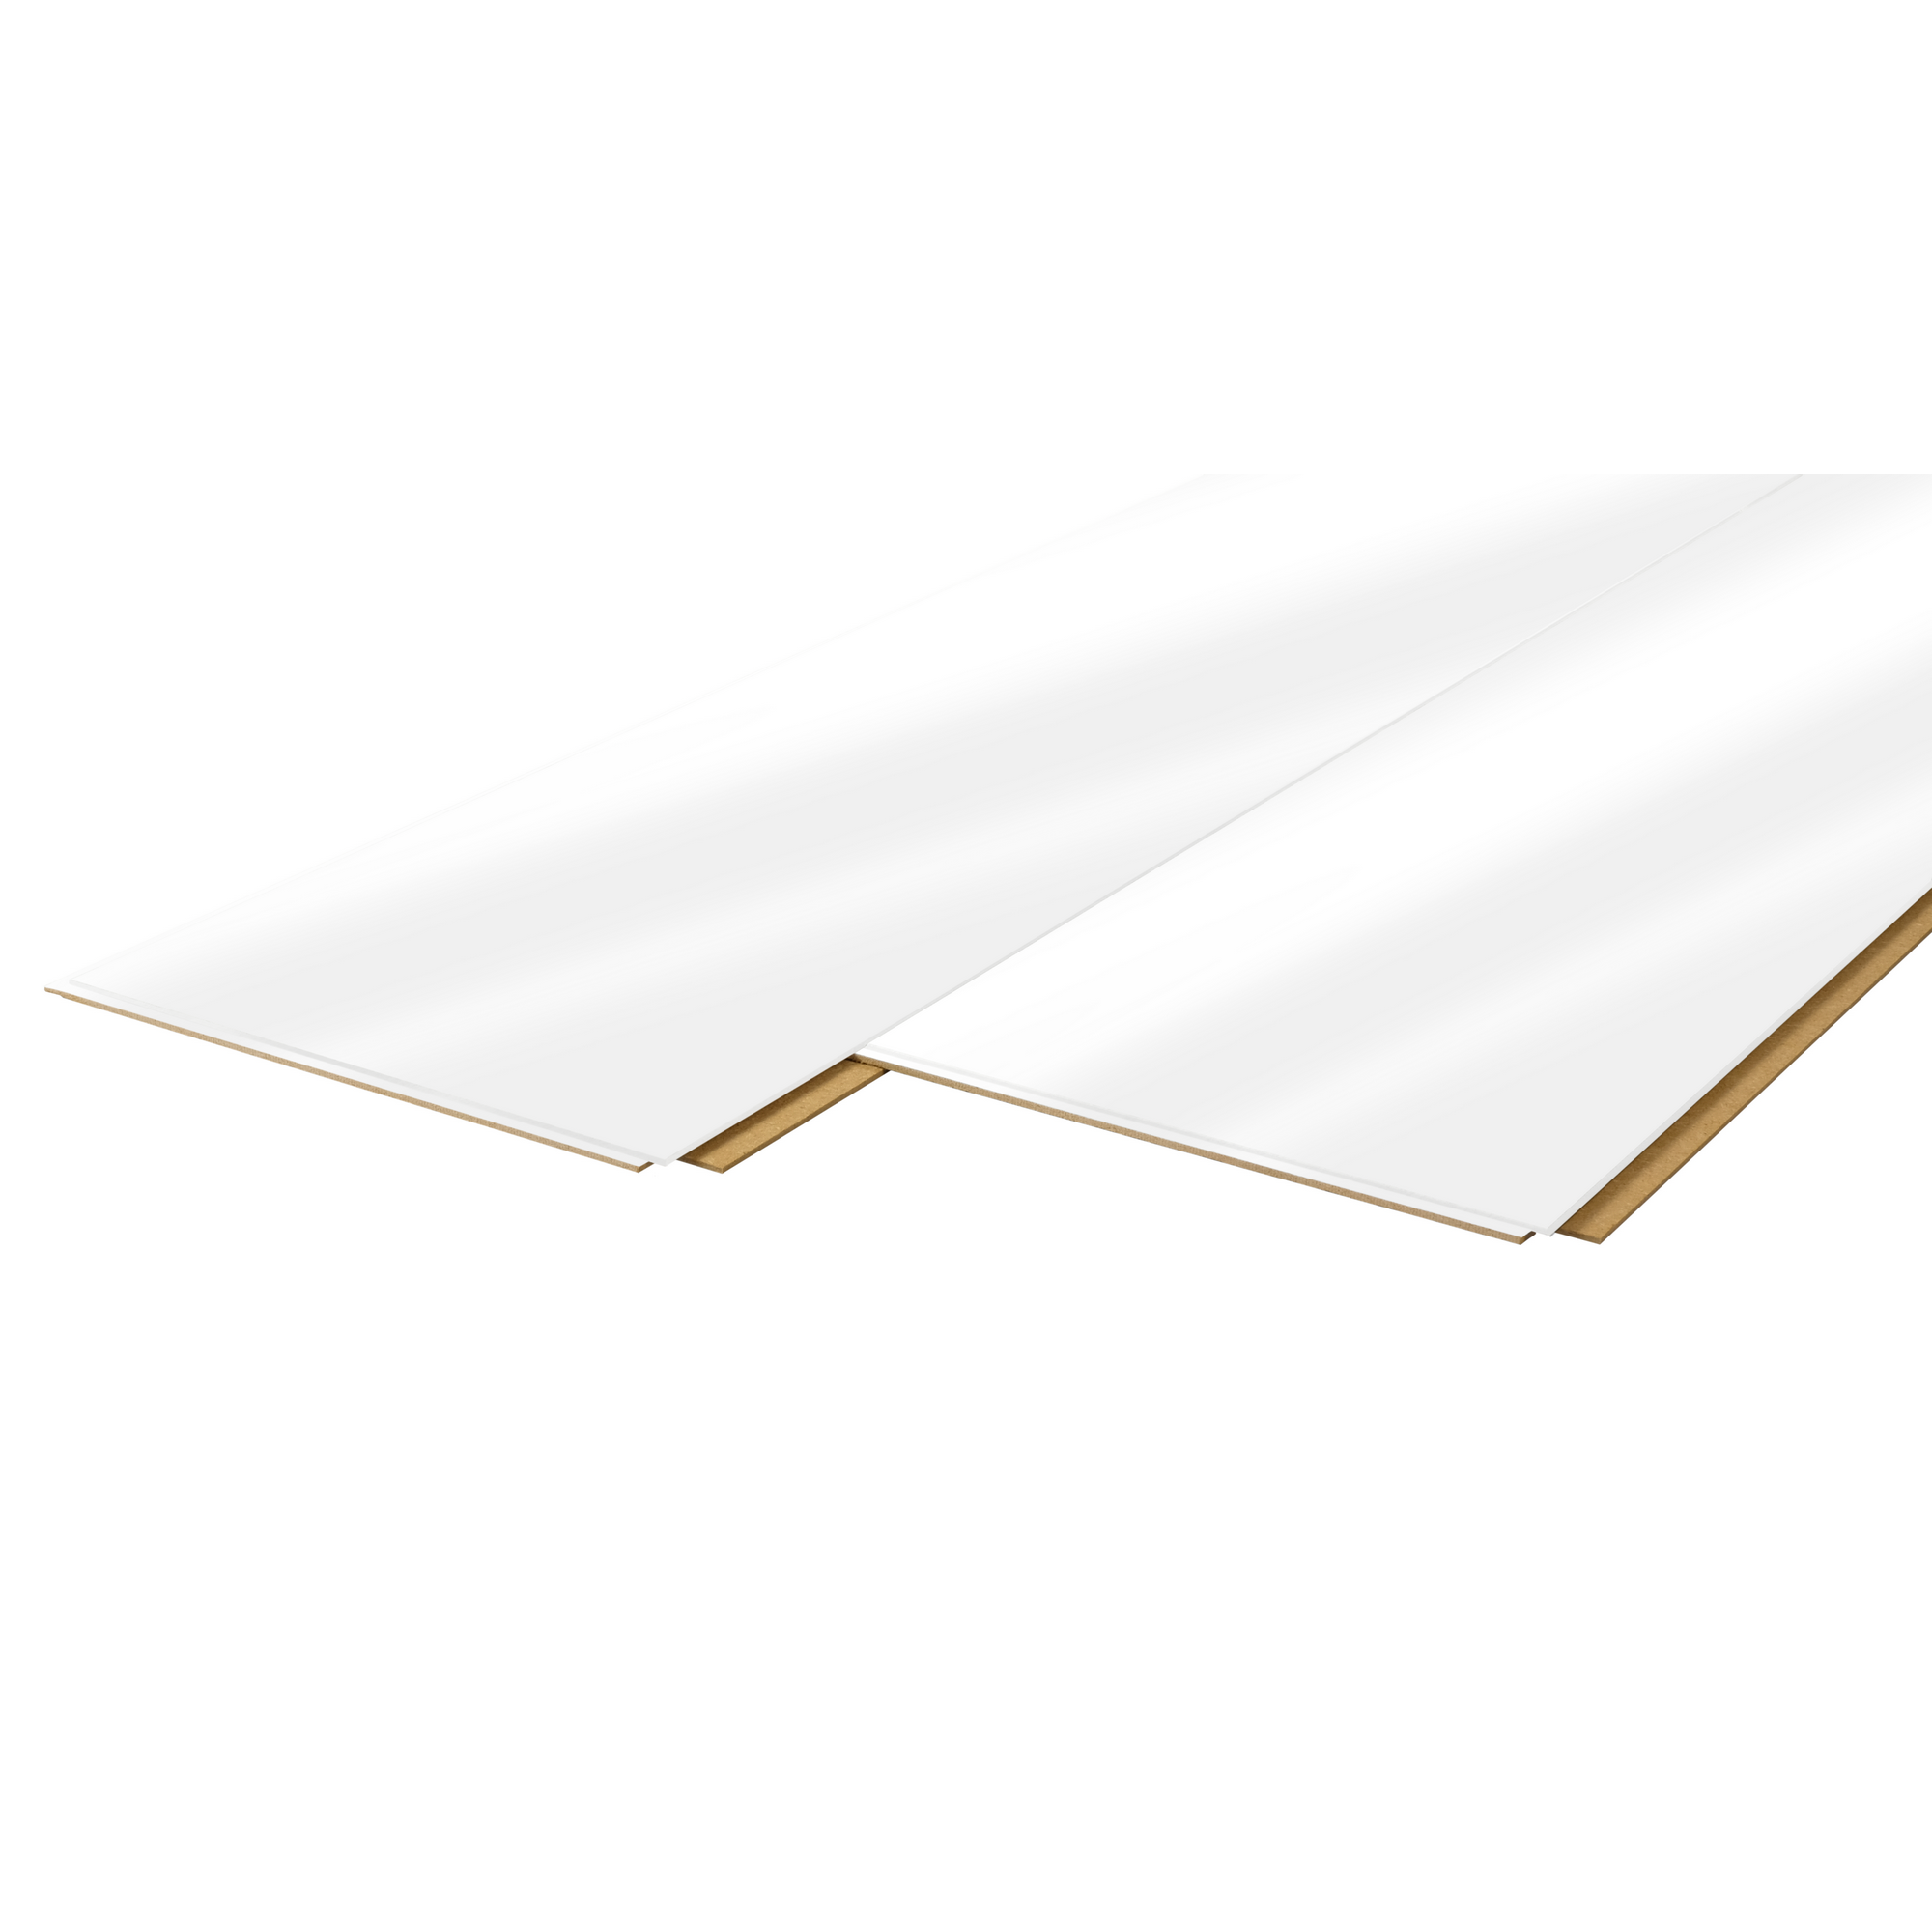 Paneele 'Coverboard' ultraweiß glänzend 129 x 62 x 1,2 cm + product picture